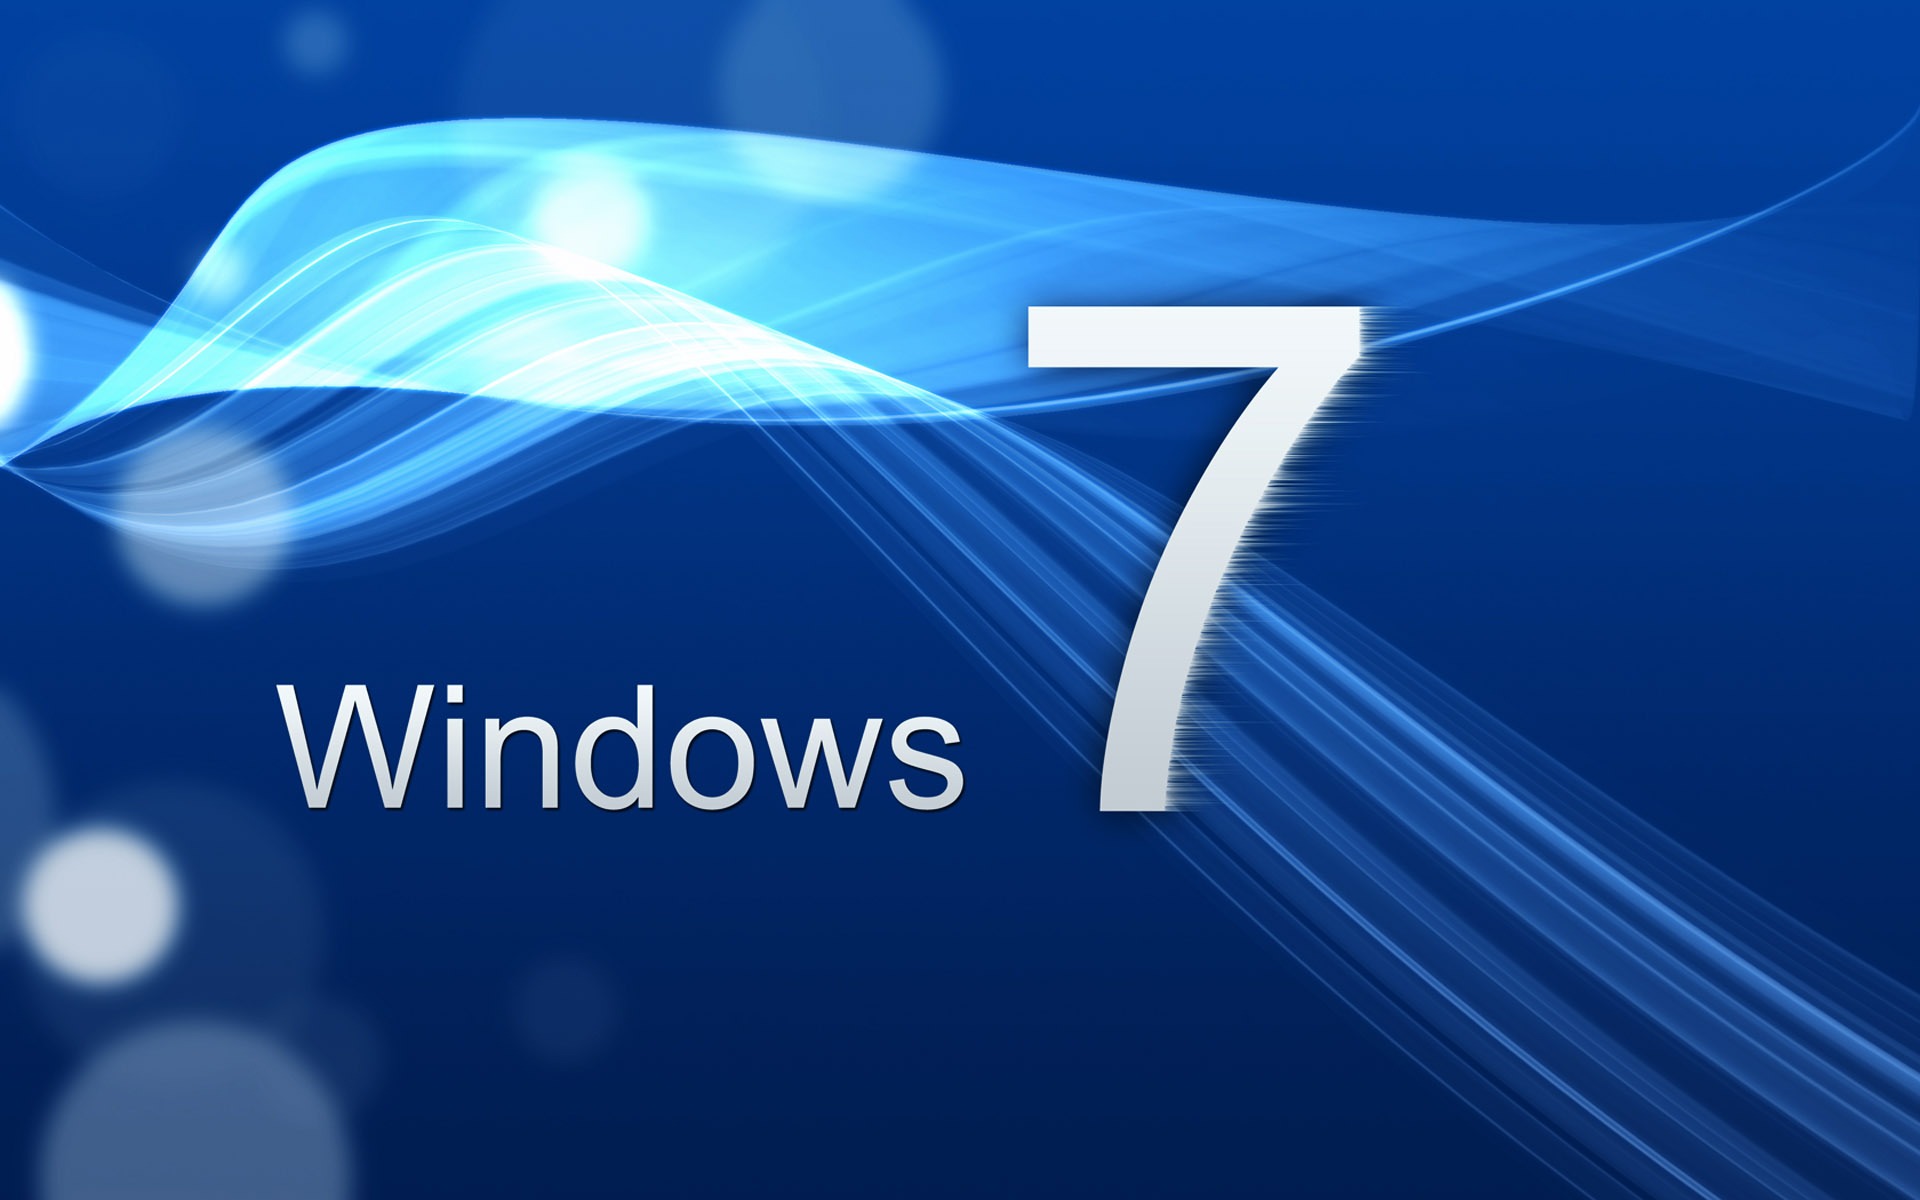  Windows7のテーマの壁紙(2) #1 - 1920x1200